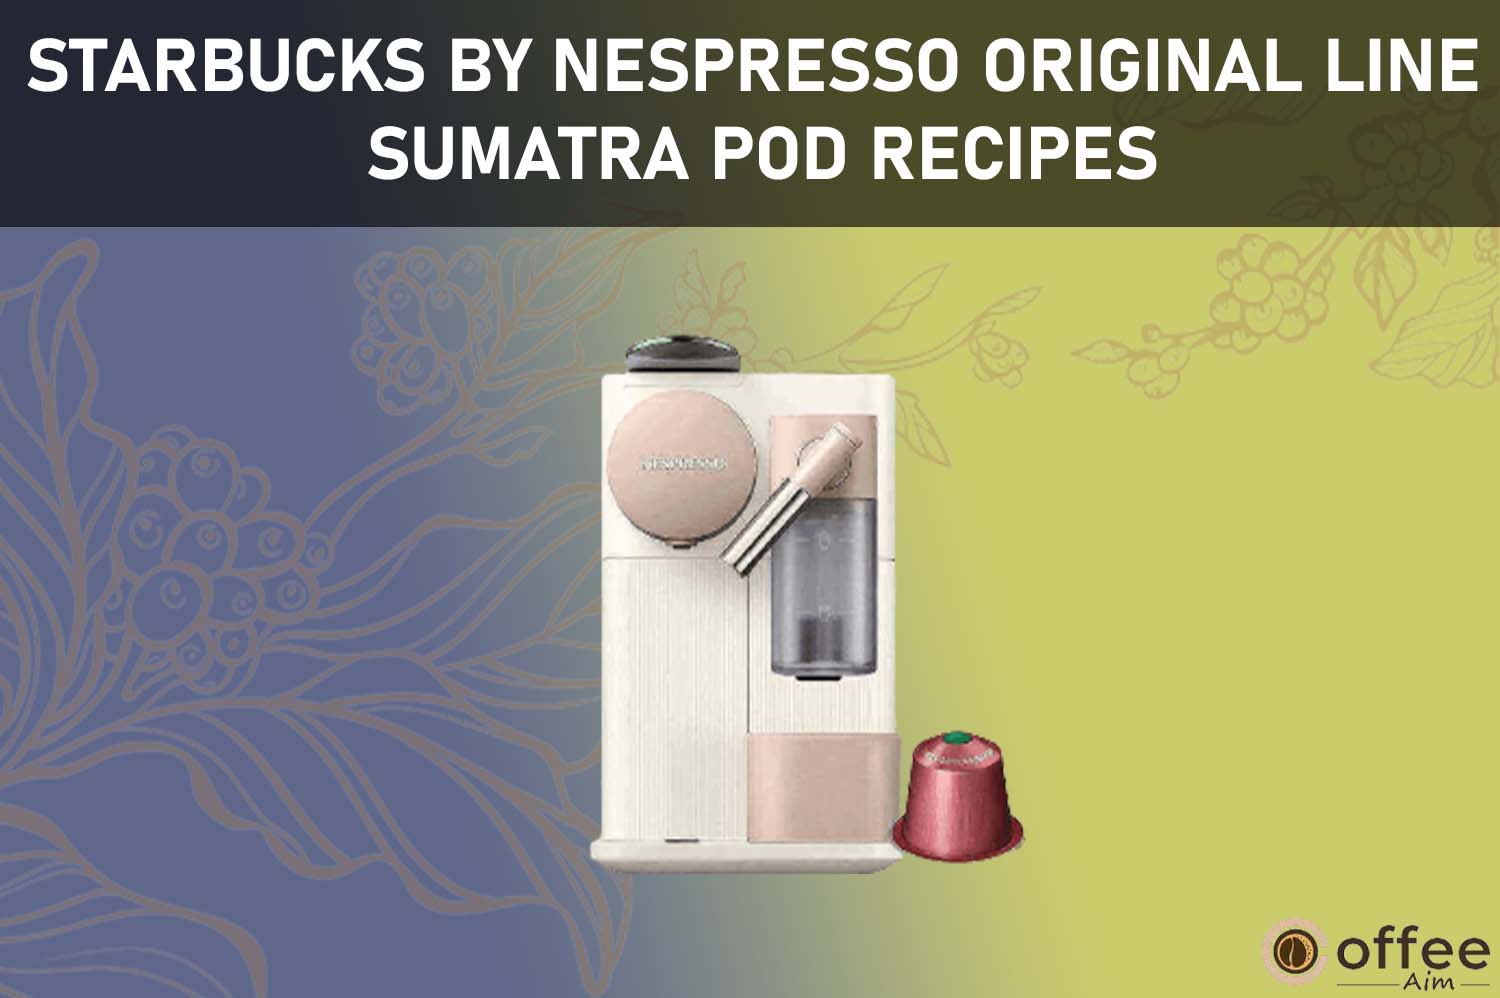 Featured image for the article "Starbucks by Nespresso Original Line Sumatra Pod Recipes"